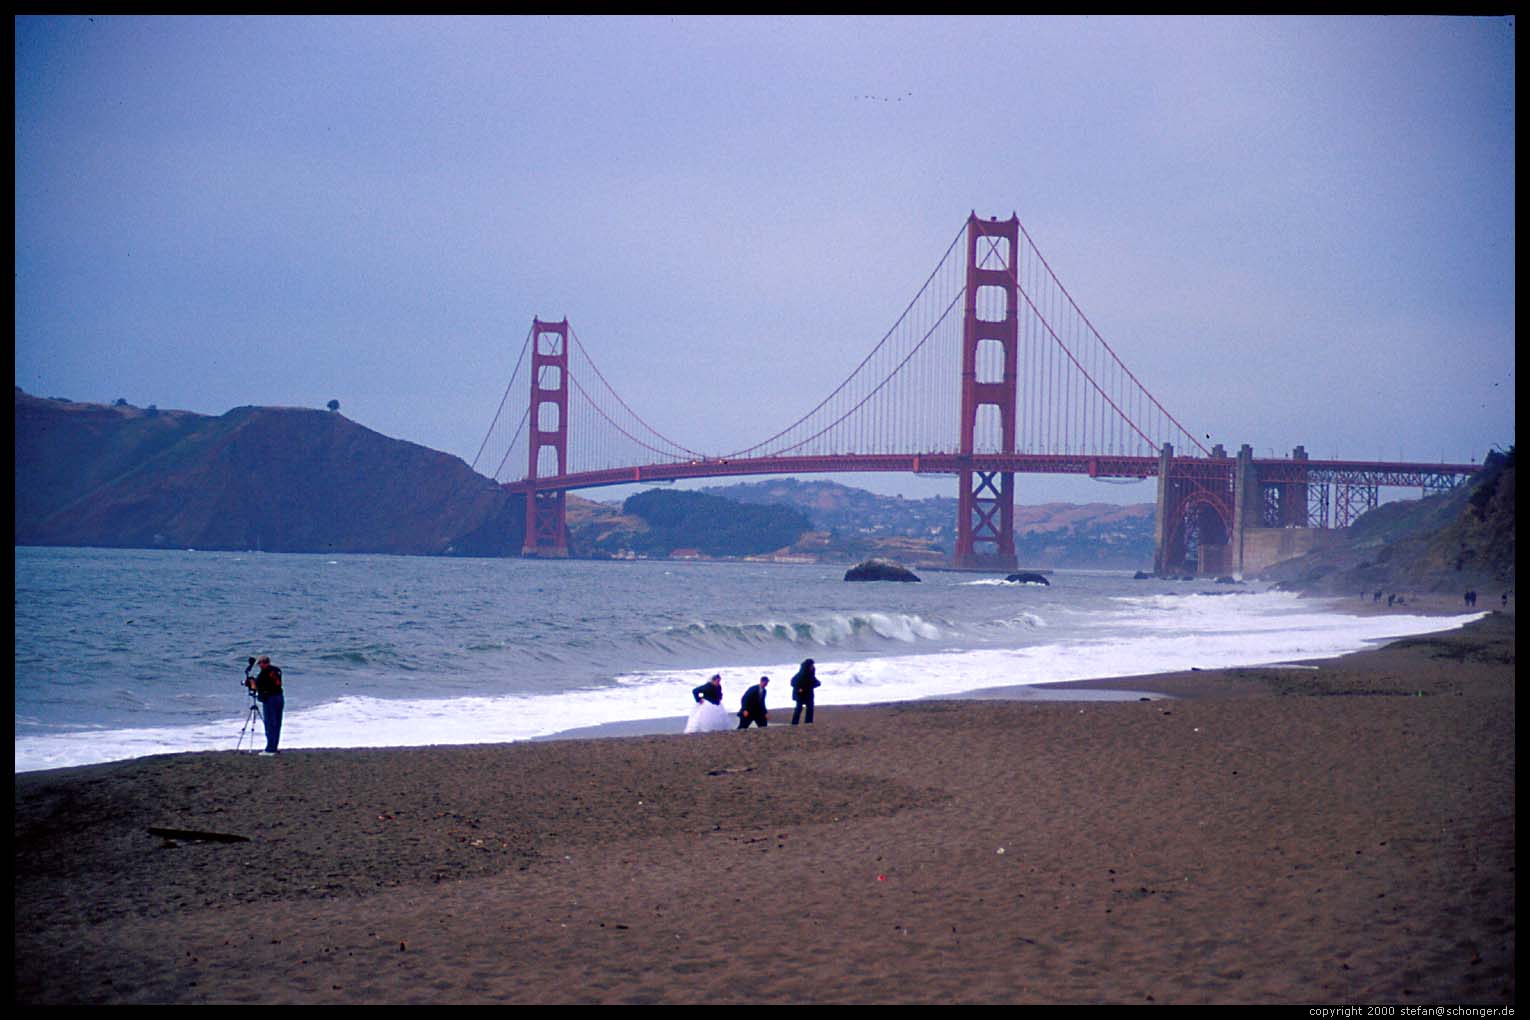 Baker Beach, San Francisco, CA, August 2000